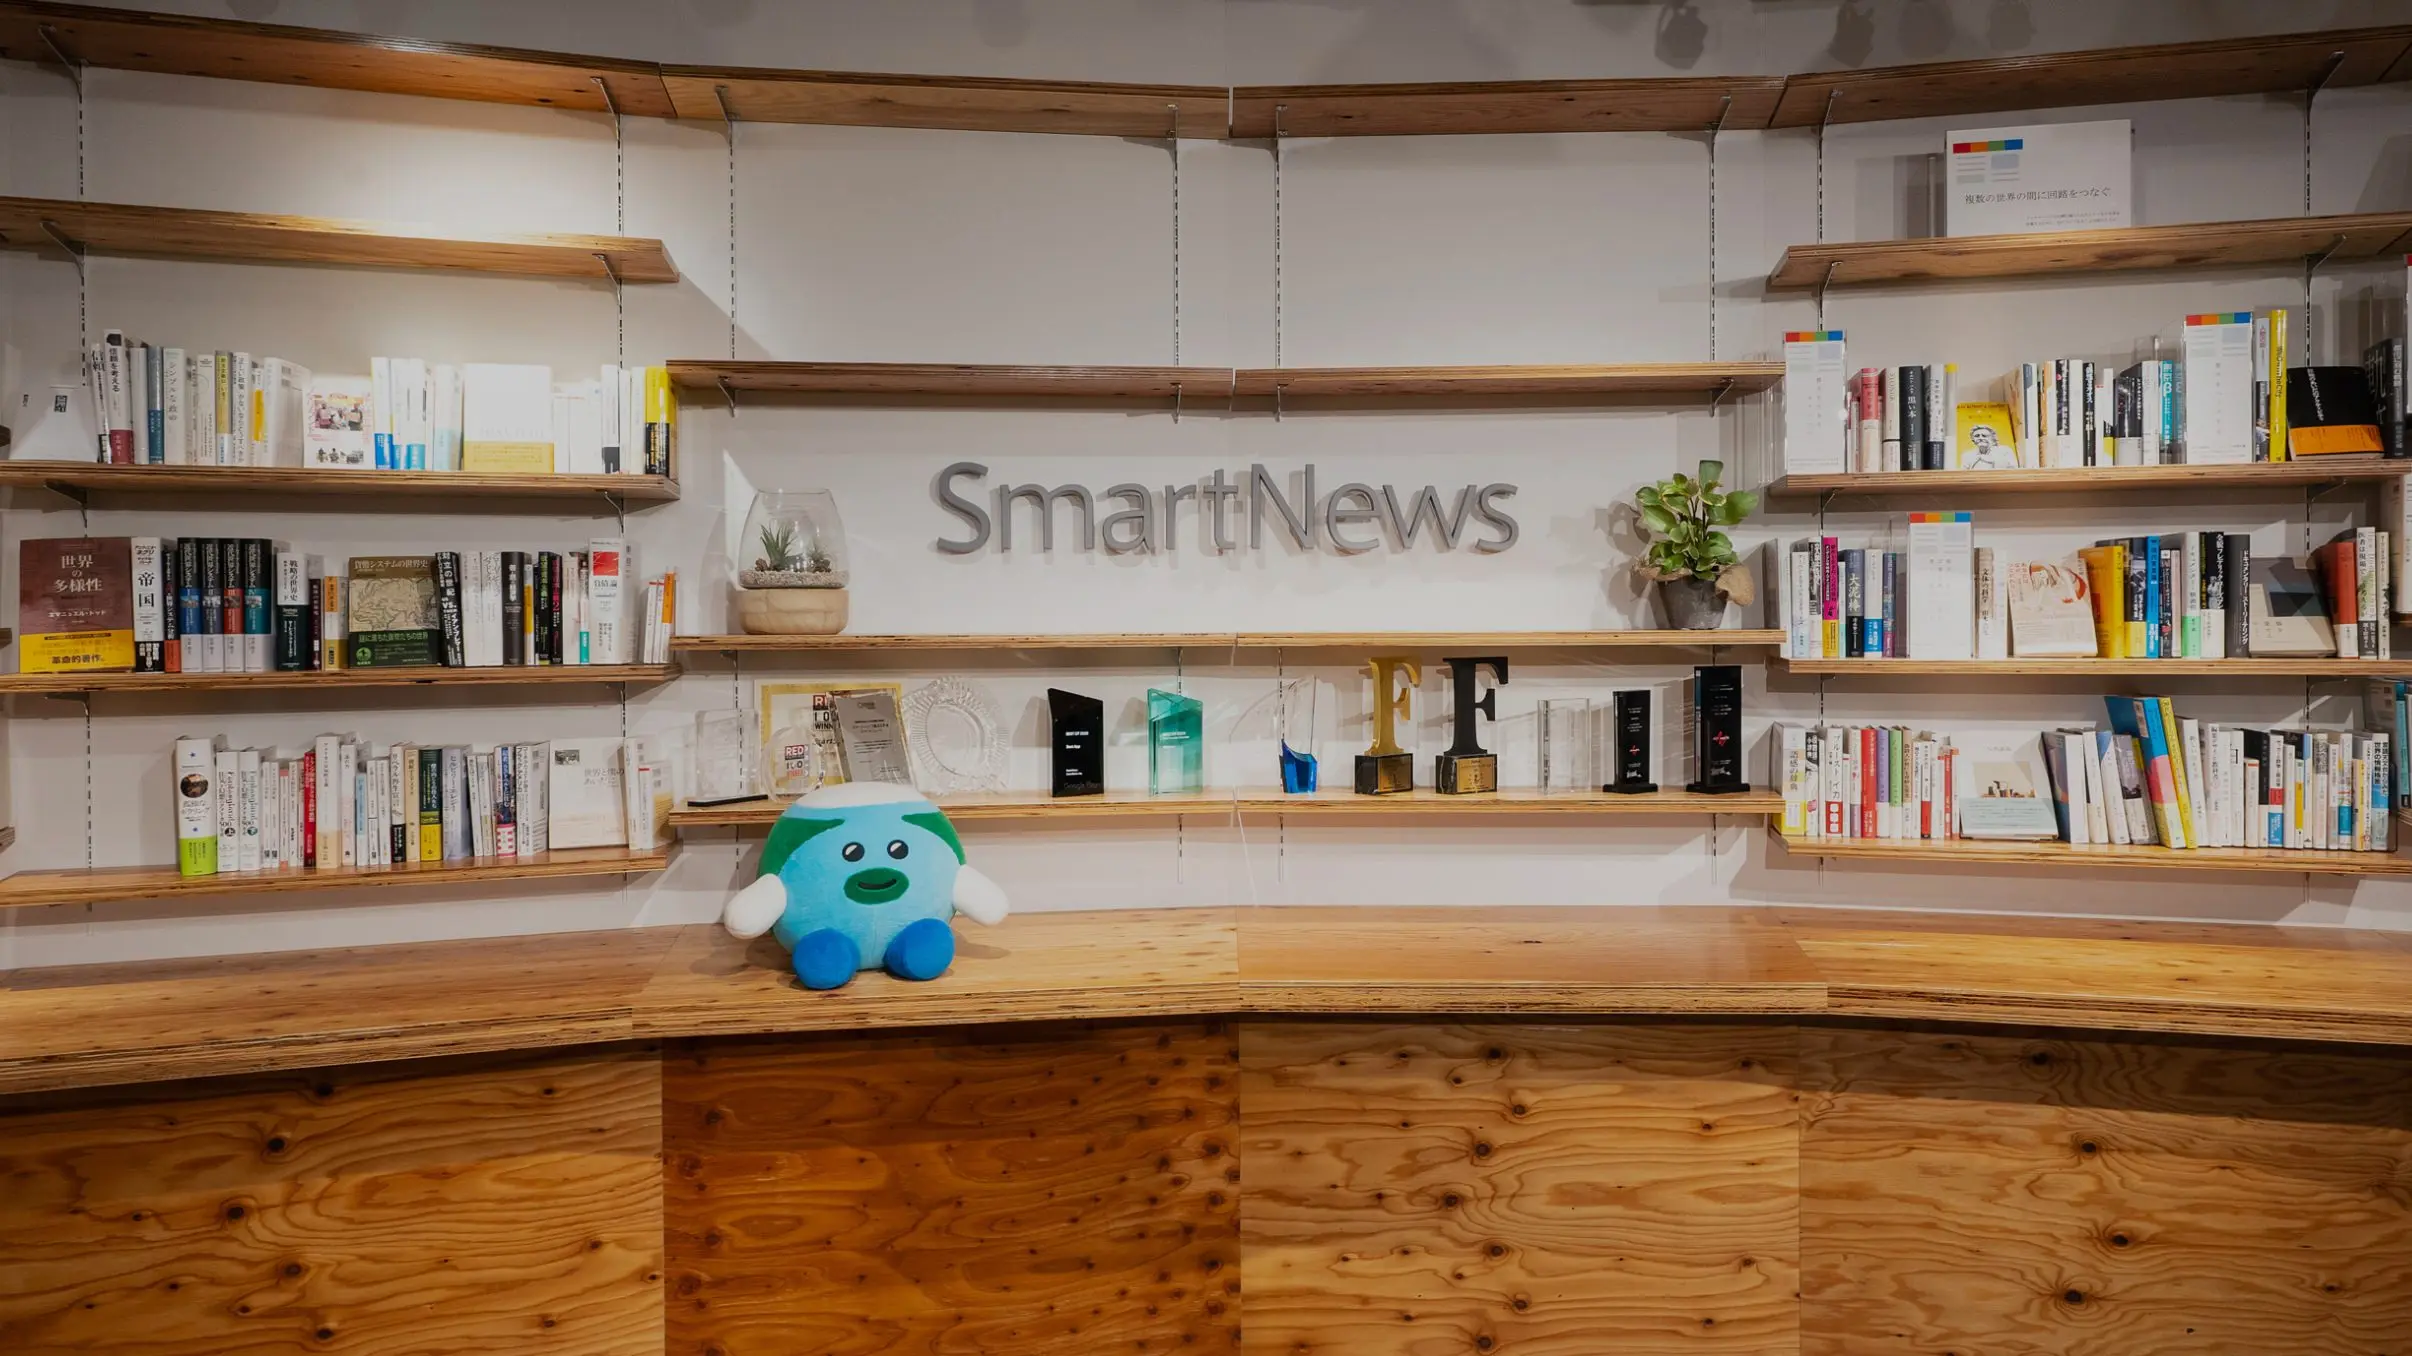 smartnews office building